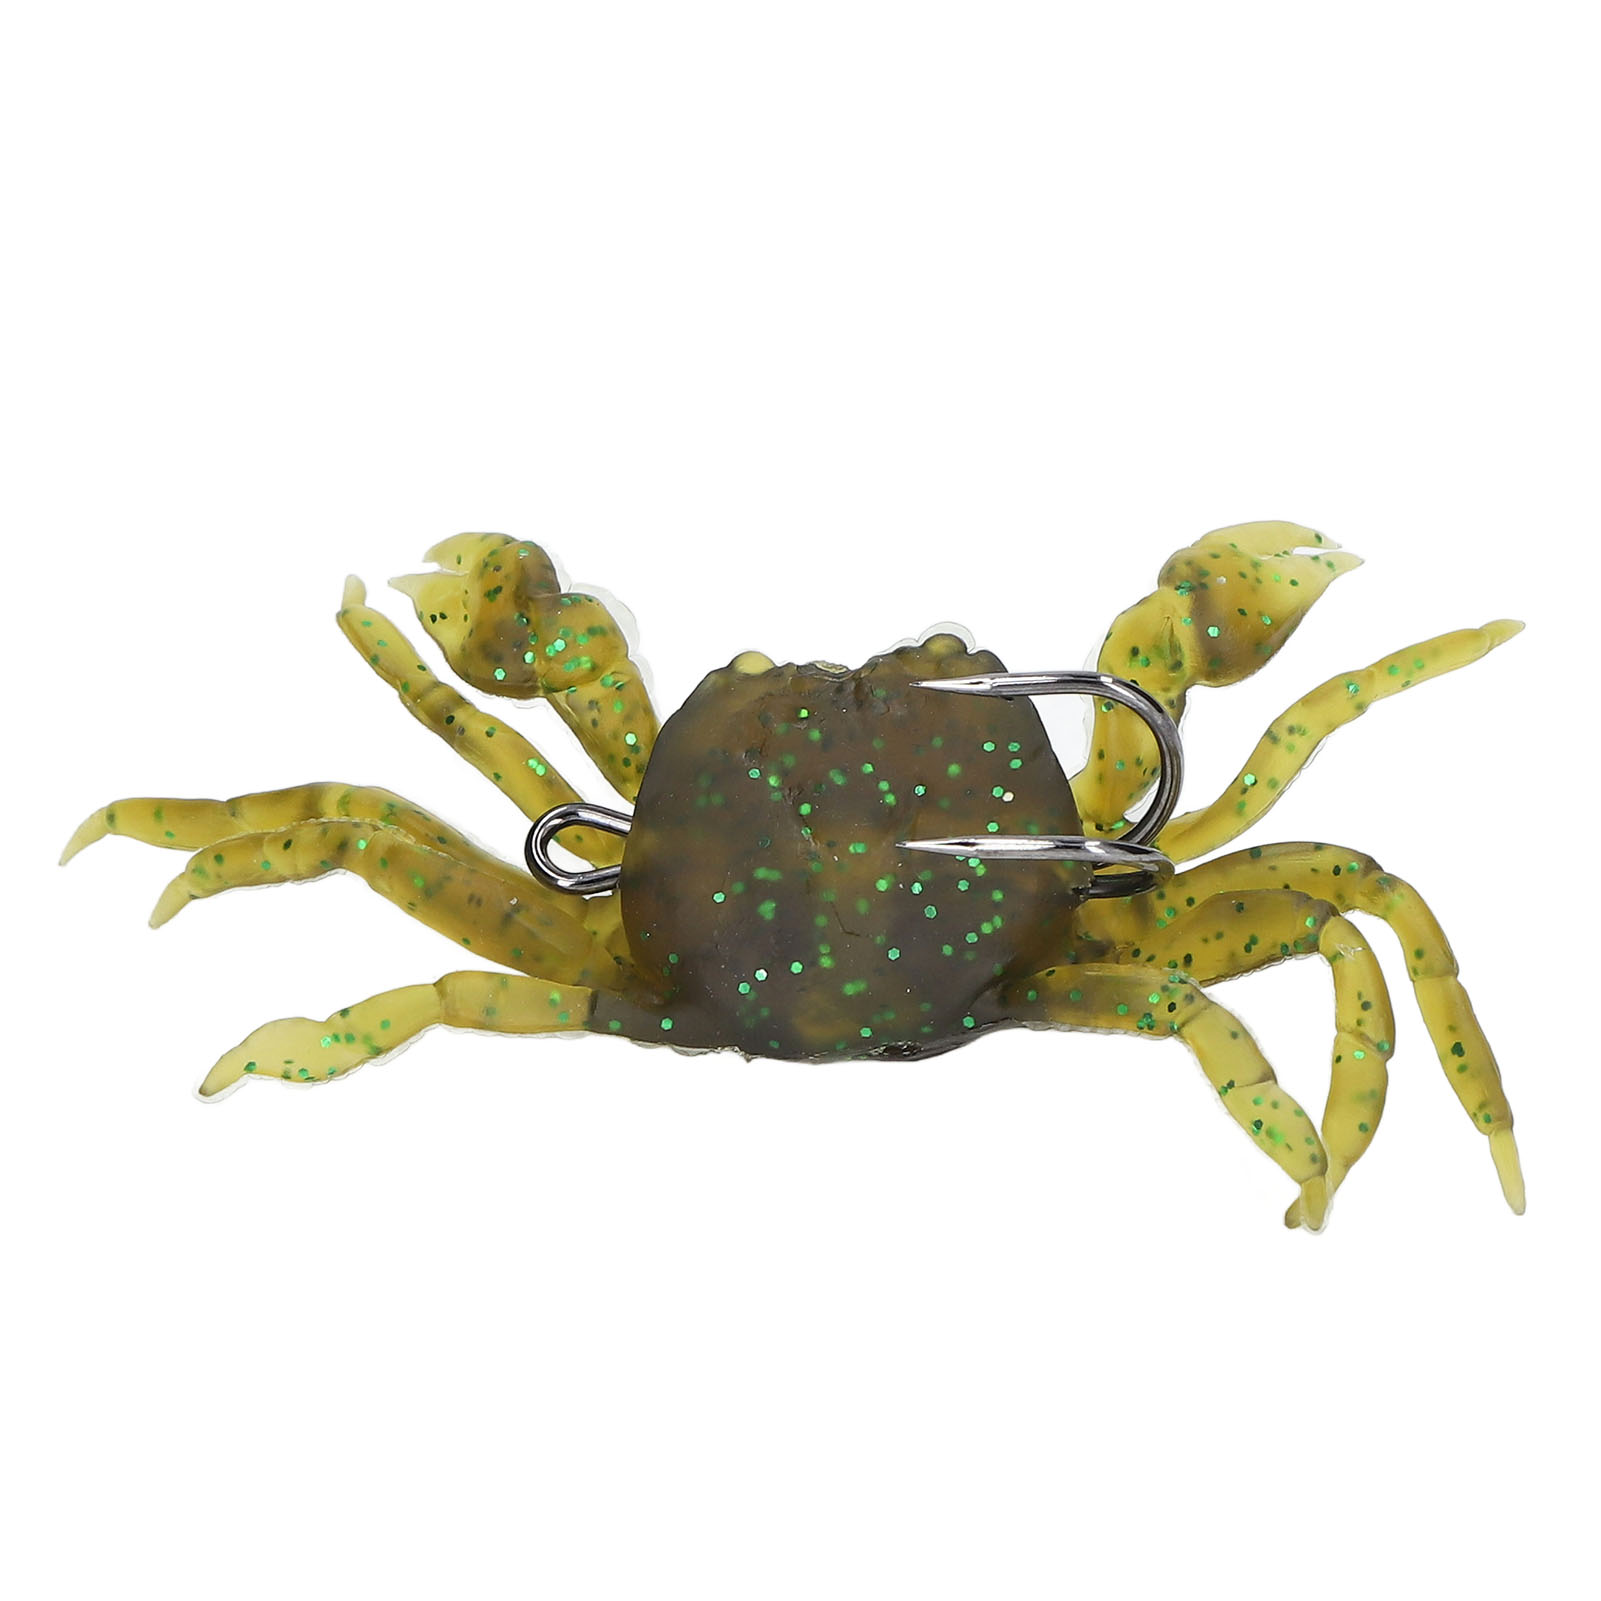 8Pcs Artificial Crab Bait 13cm 33.5g Simulation Crab Soft Lure Fishing Bait